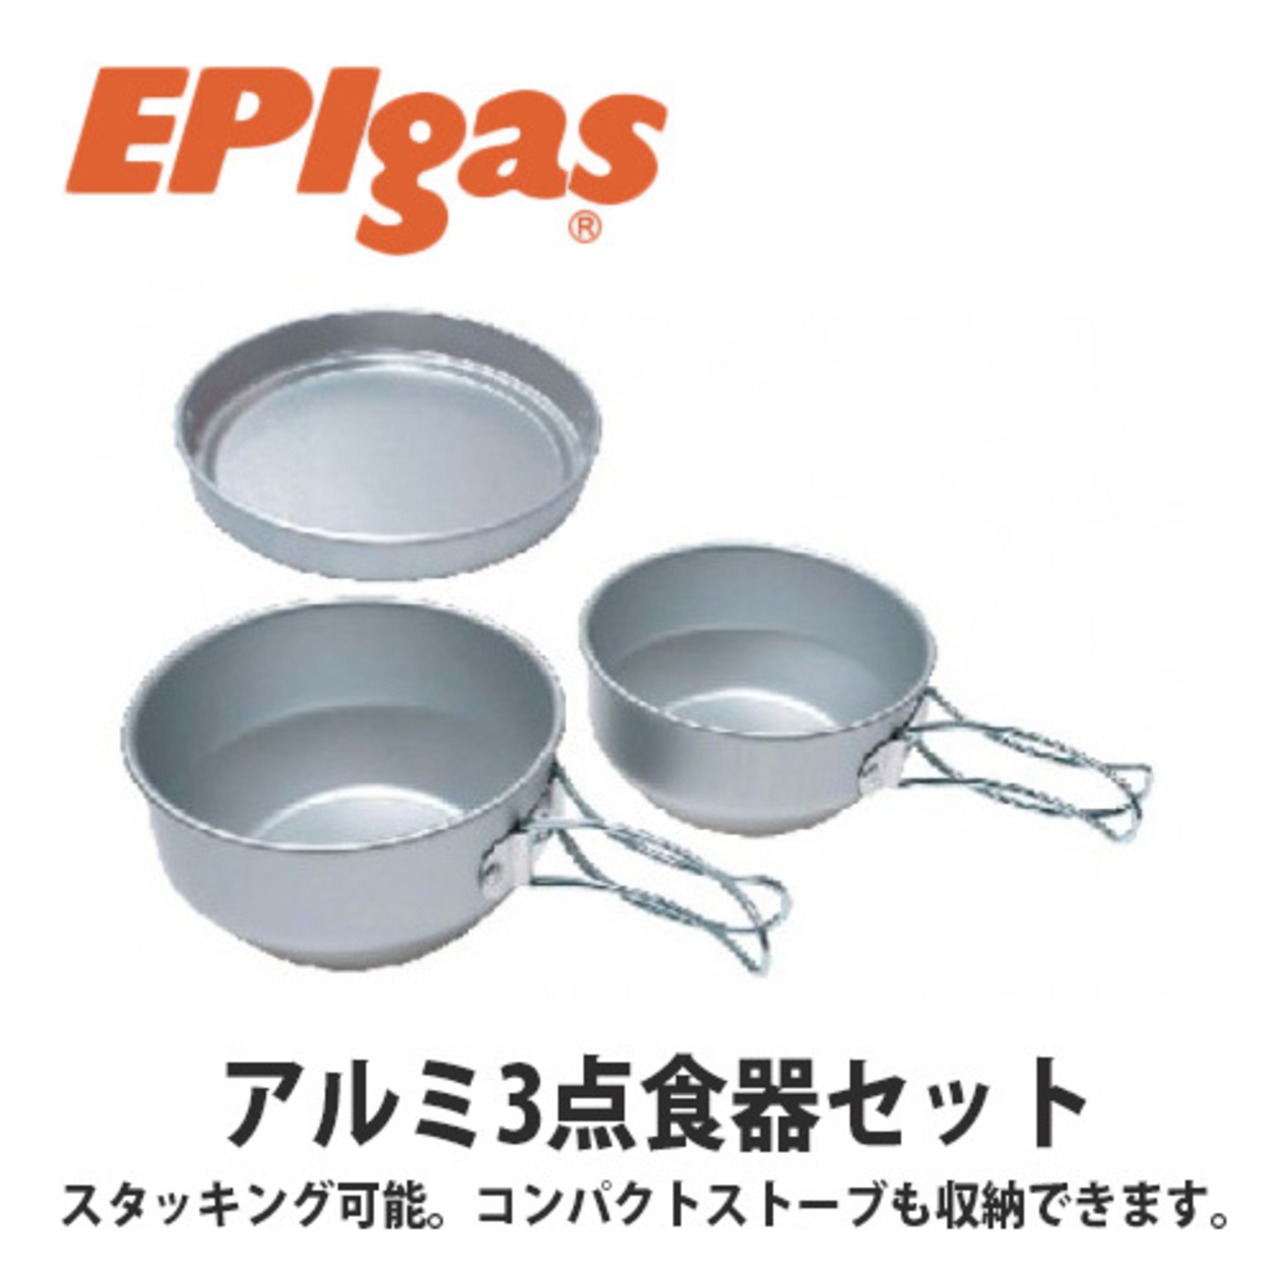 EPIgas(イーピーアイ ガス) アルミ 3点食器セット 軽量 携帯 スタッキング